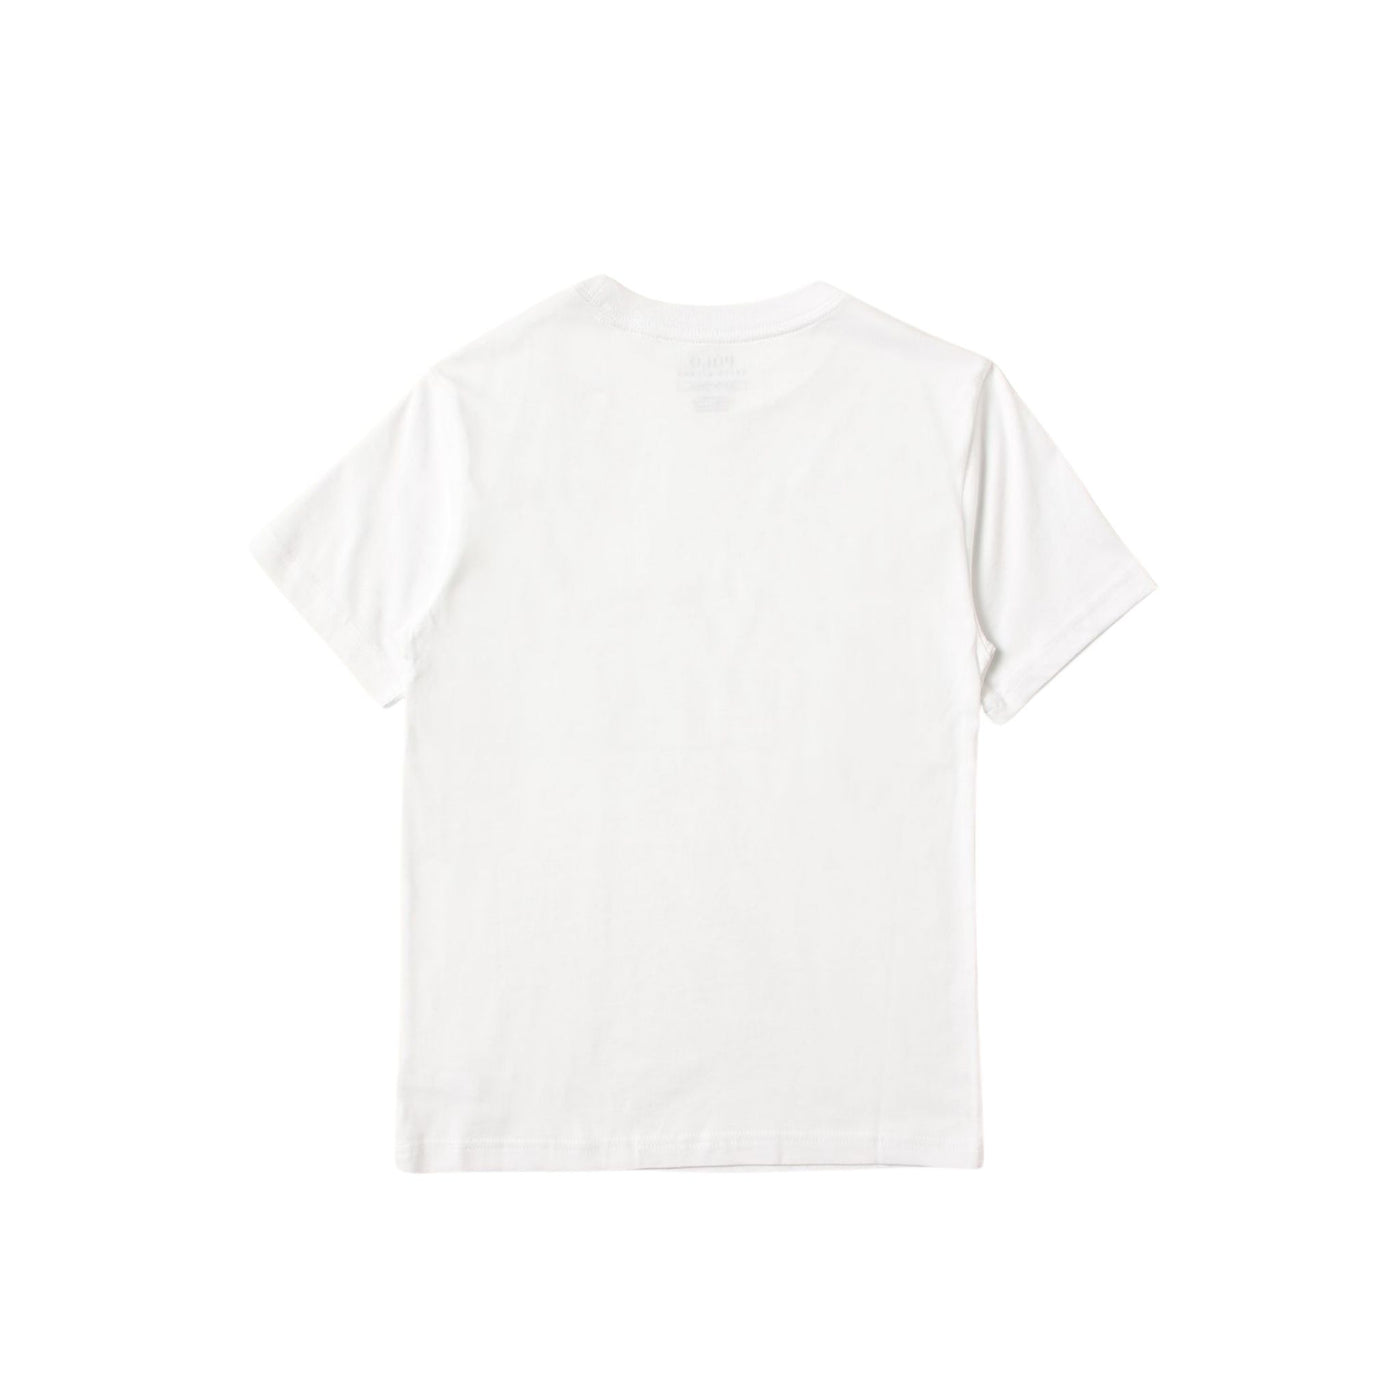 T-shirt bambino bianca Polo Ralph Lauren vista retro